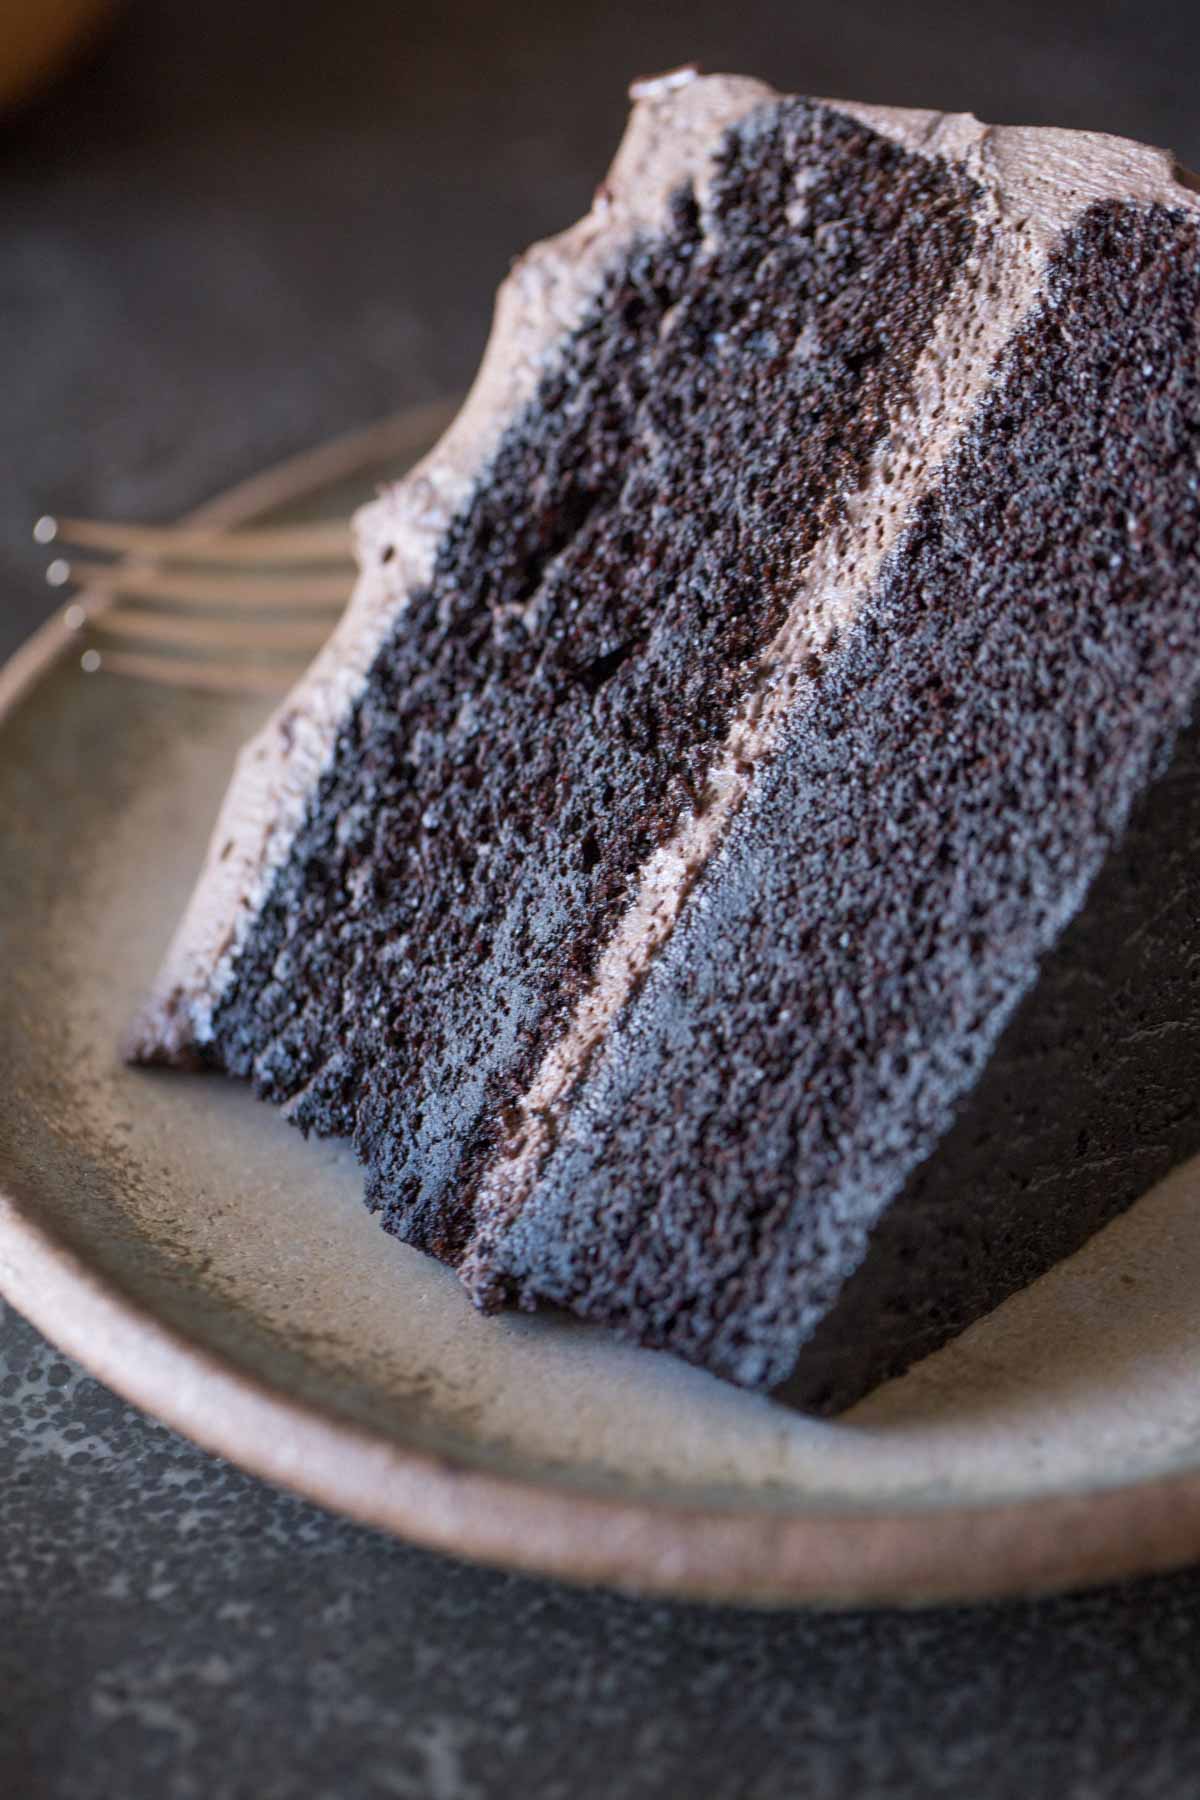 Nanny's Black Midnight Cake